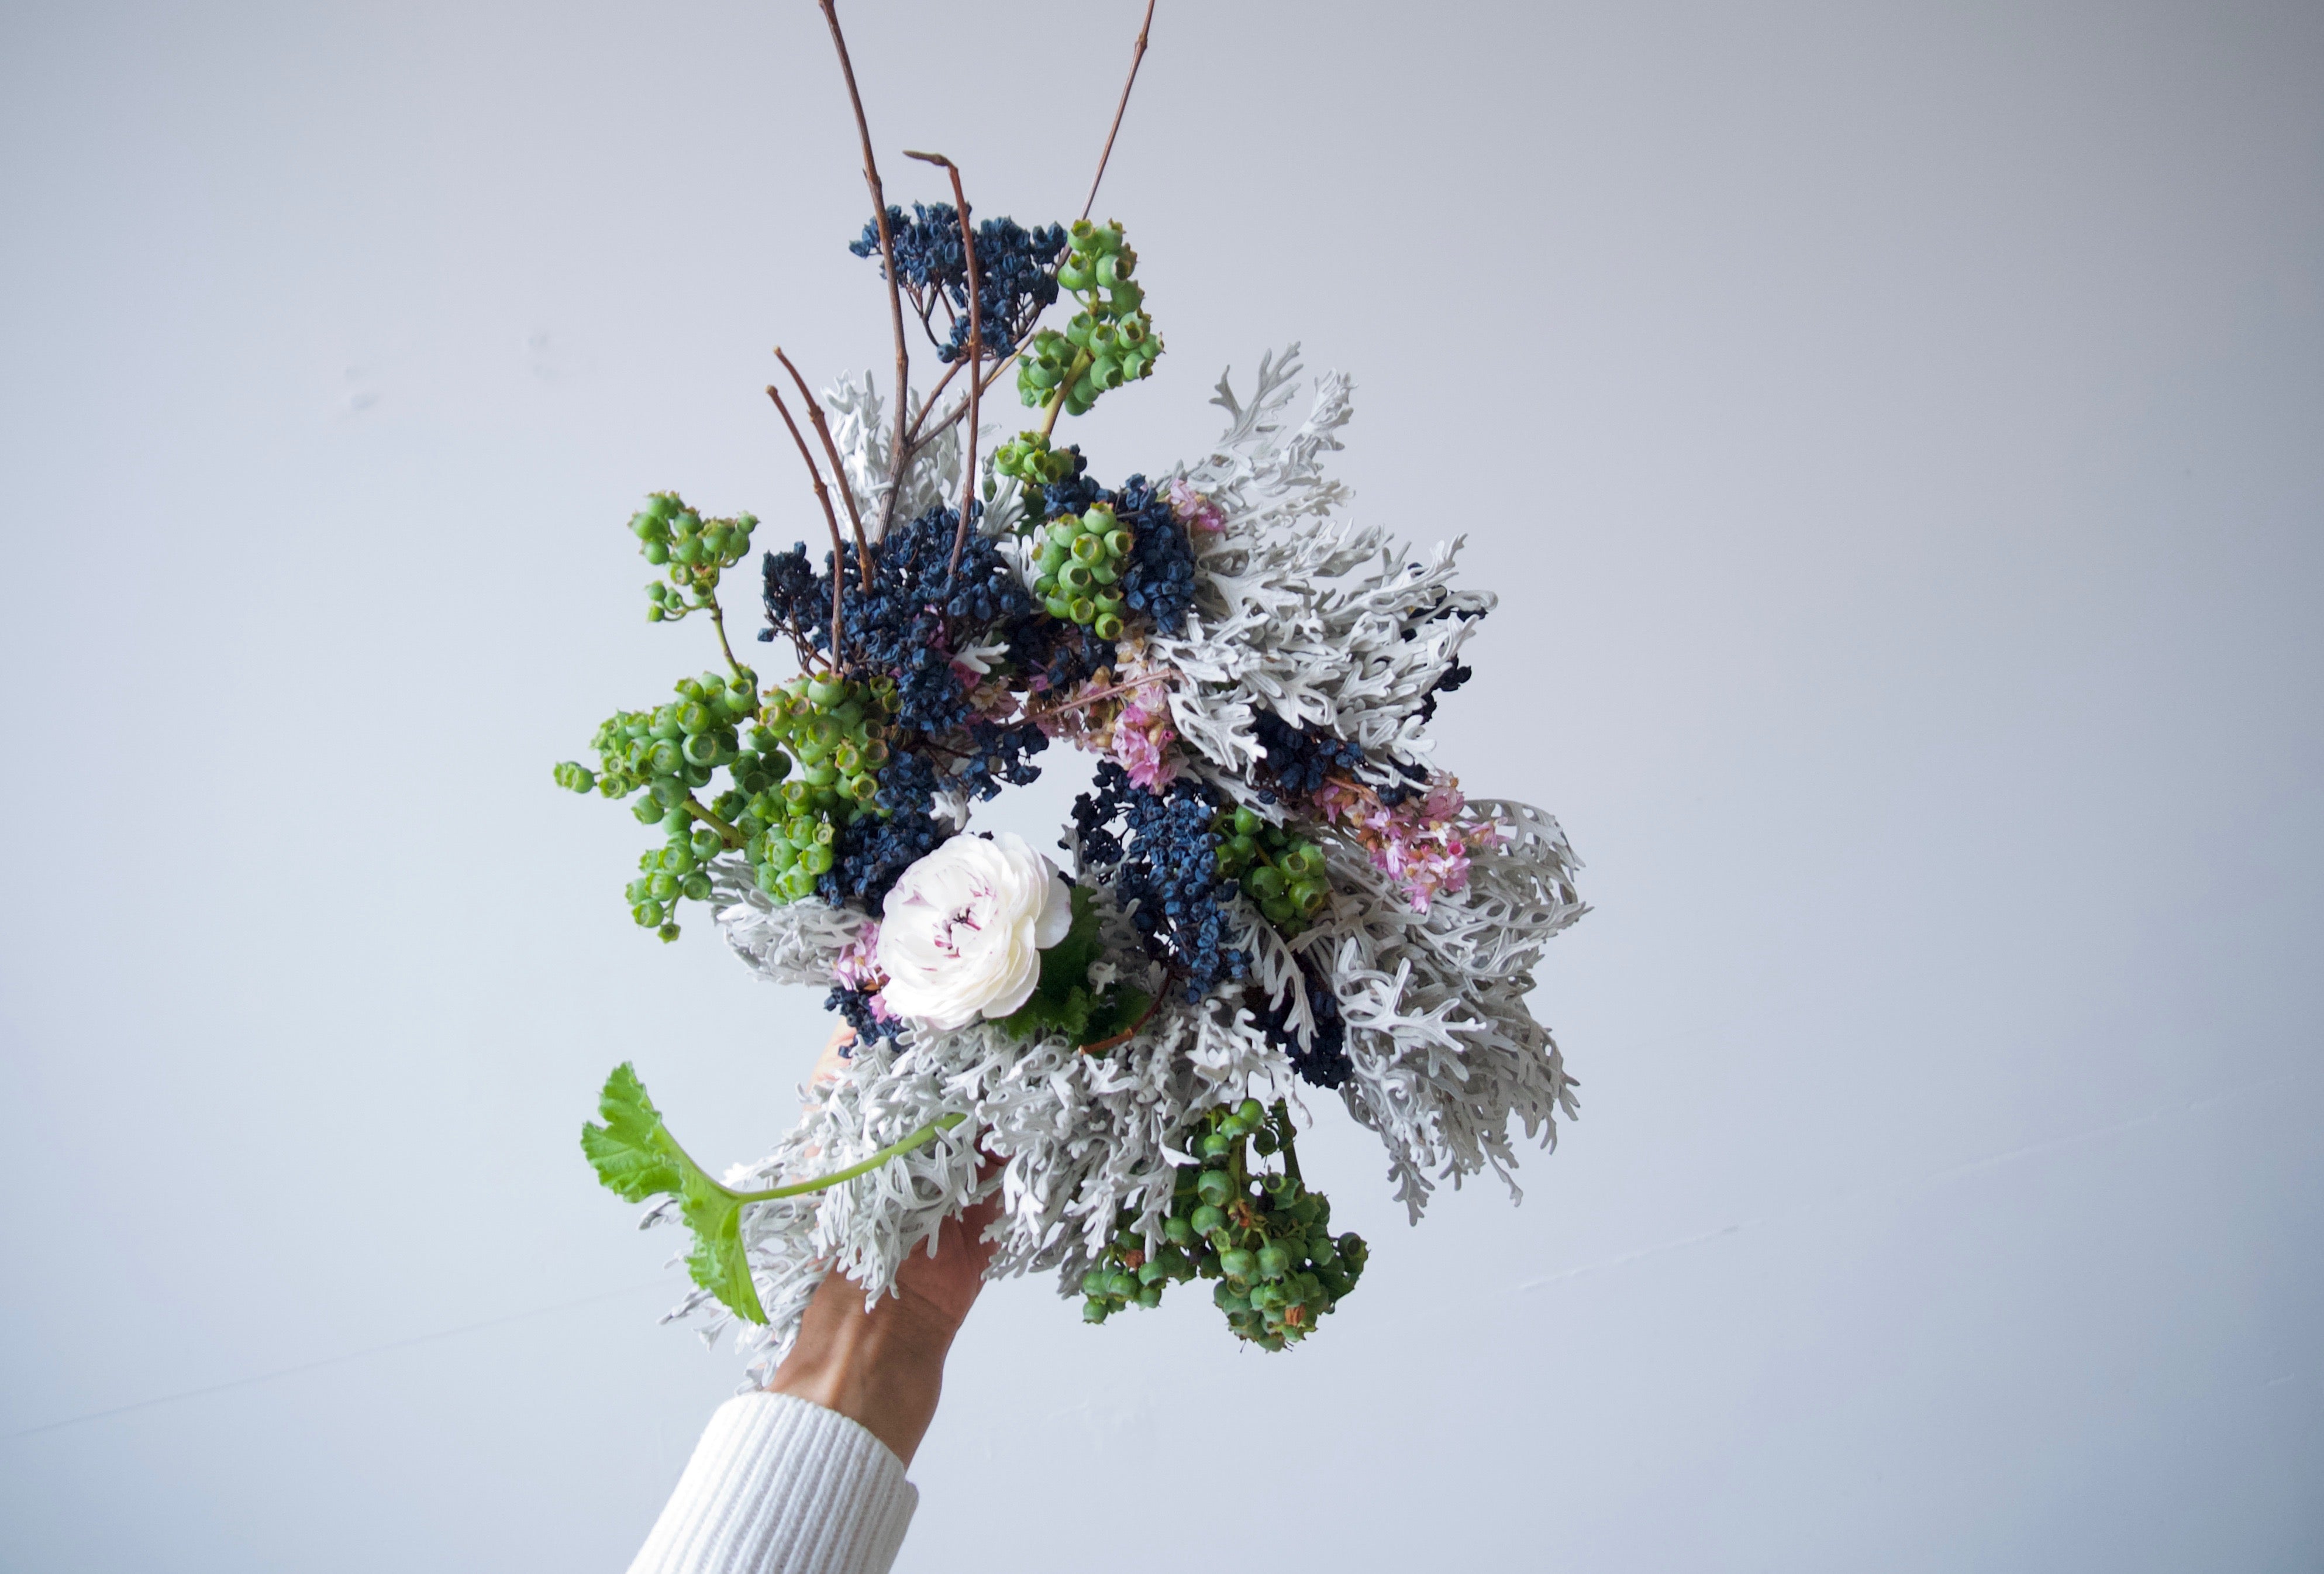 Dried Flowers Wreath | Send Wreaths Online